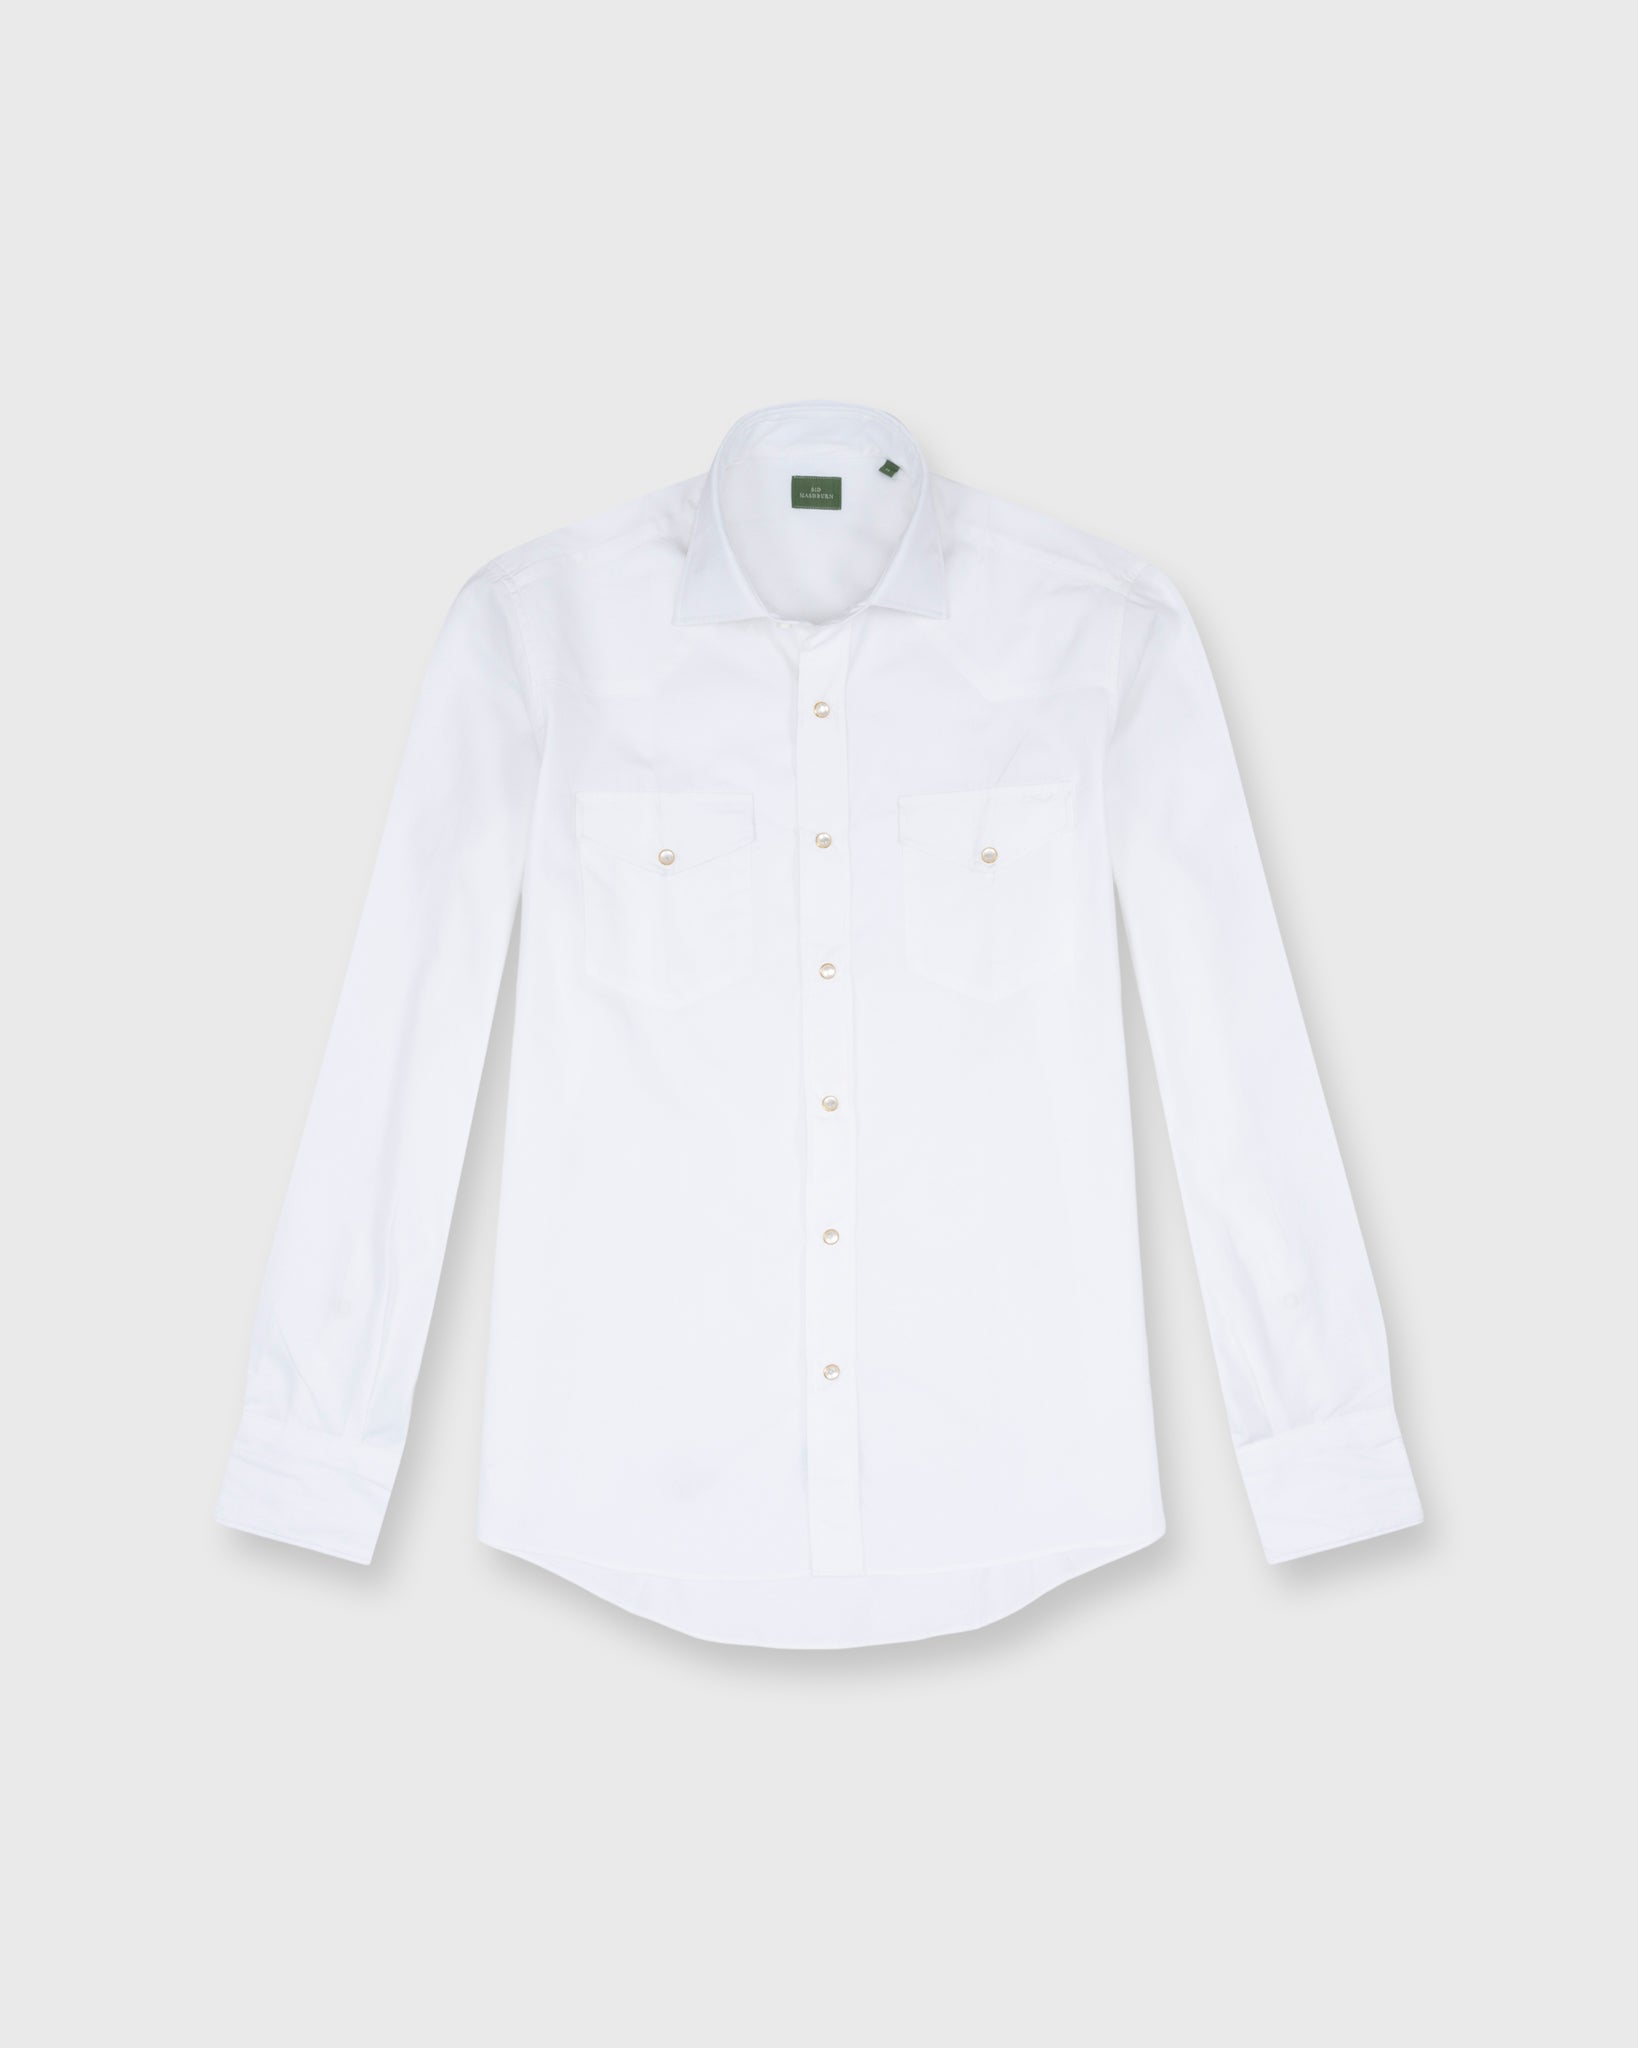 Western Work Shirt in White Poplin